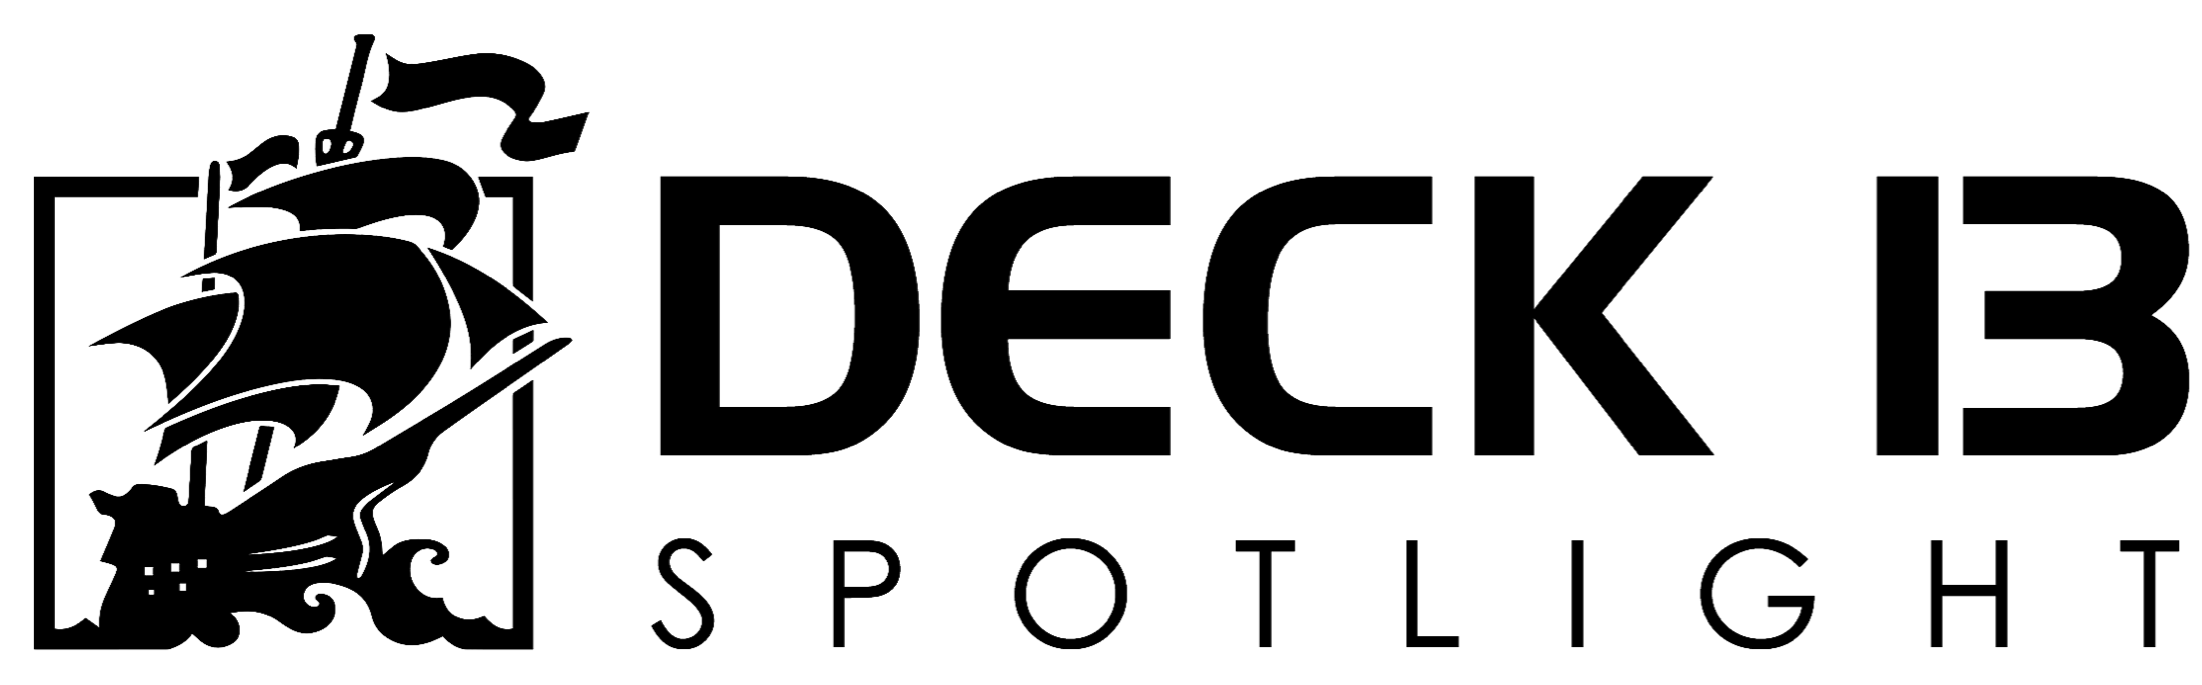 deck_13_logo.png